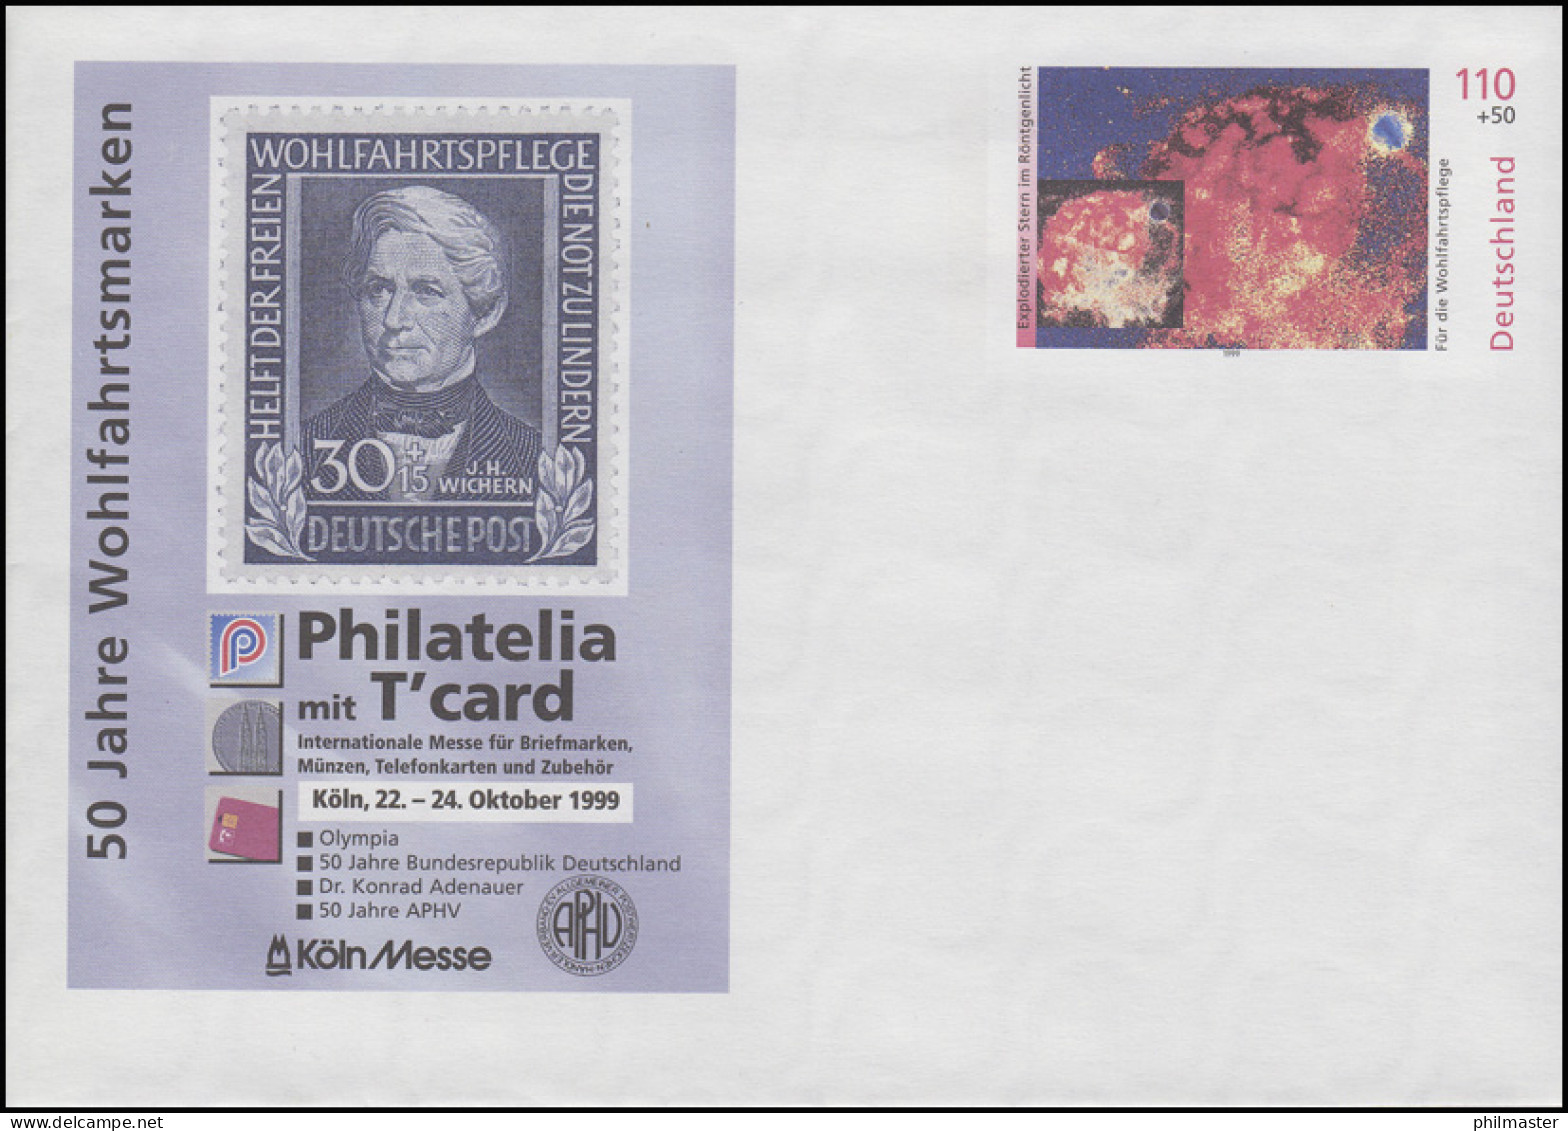 USo 10 PHILATELIA Köln 1999, Postfrisch - Covers - Mint